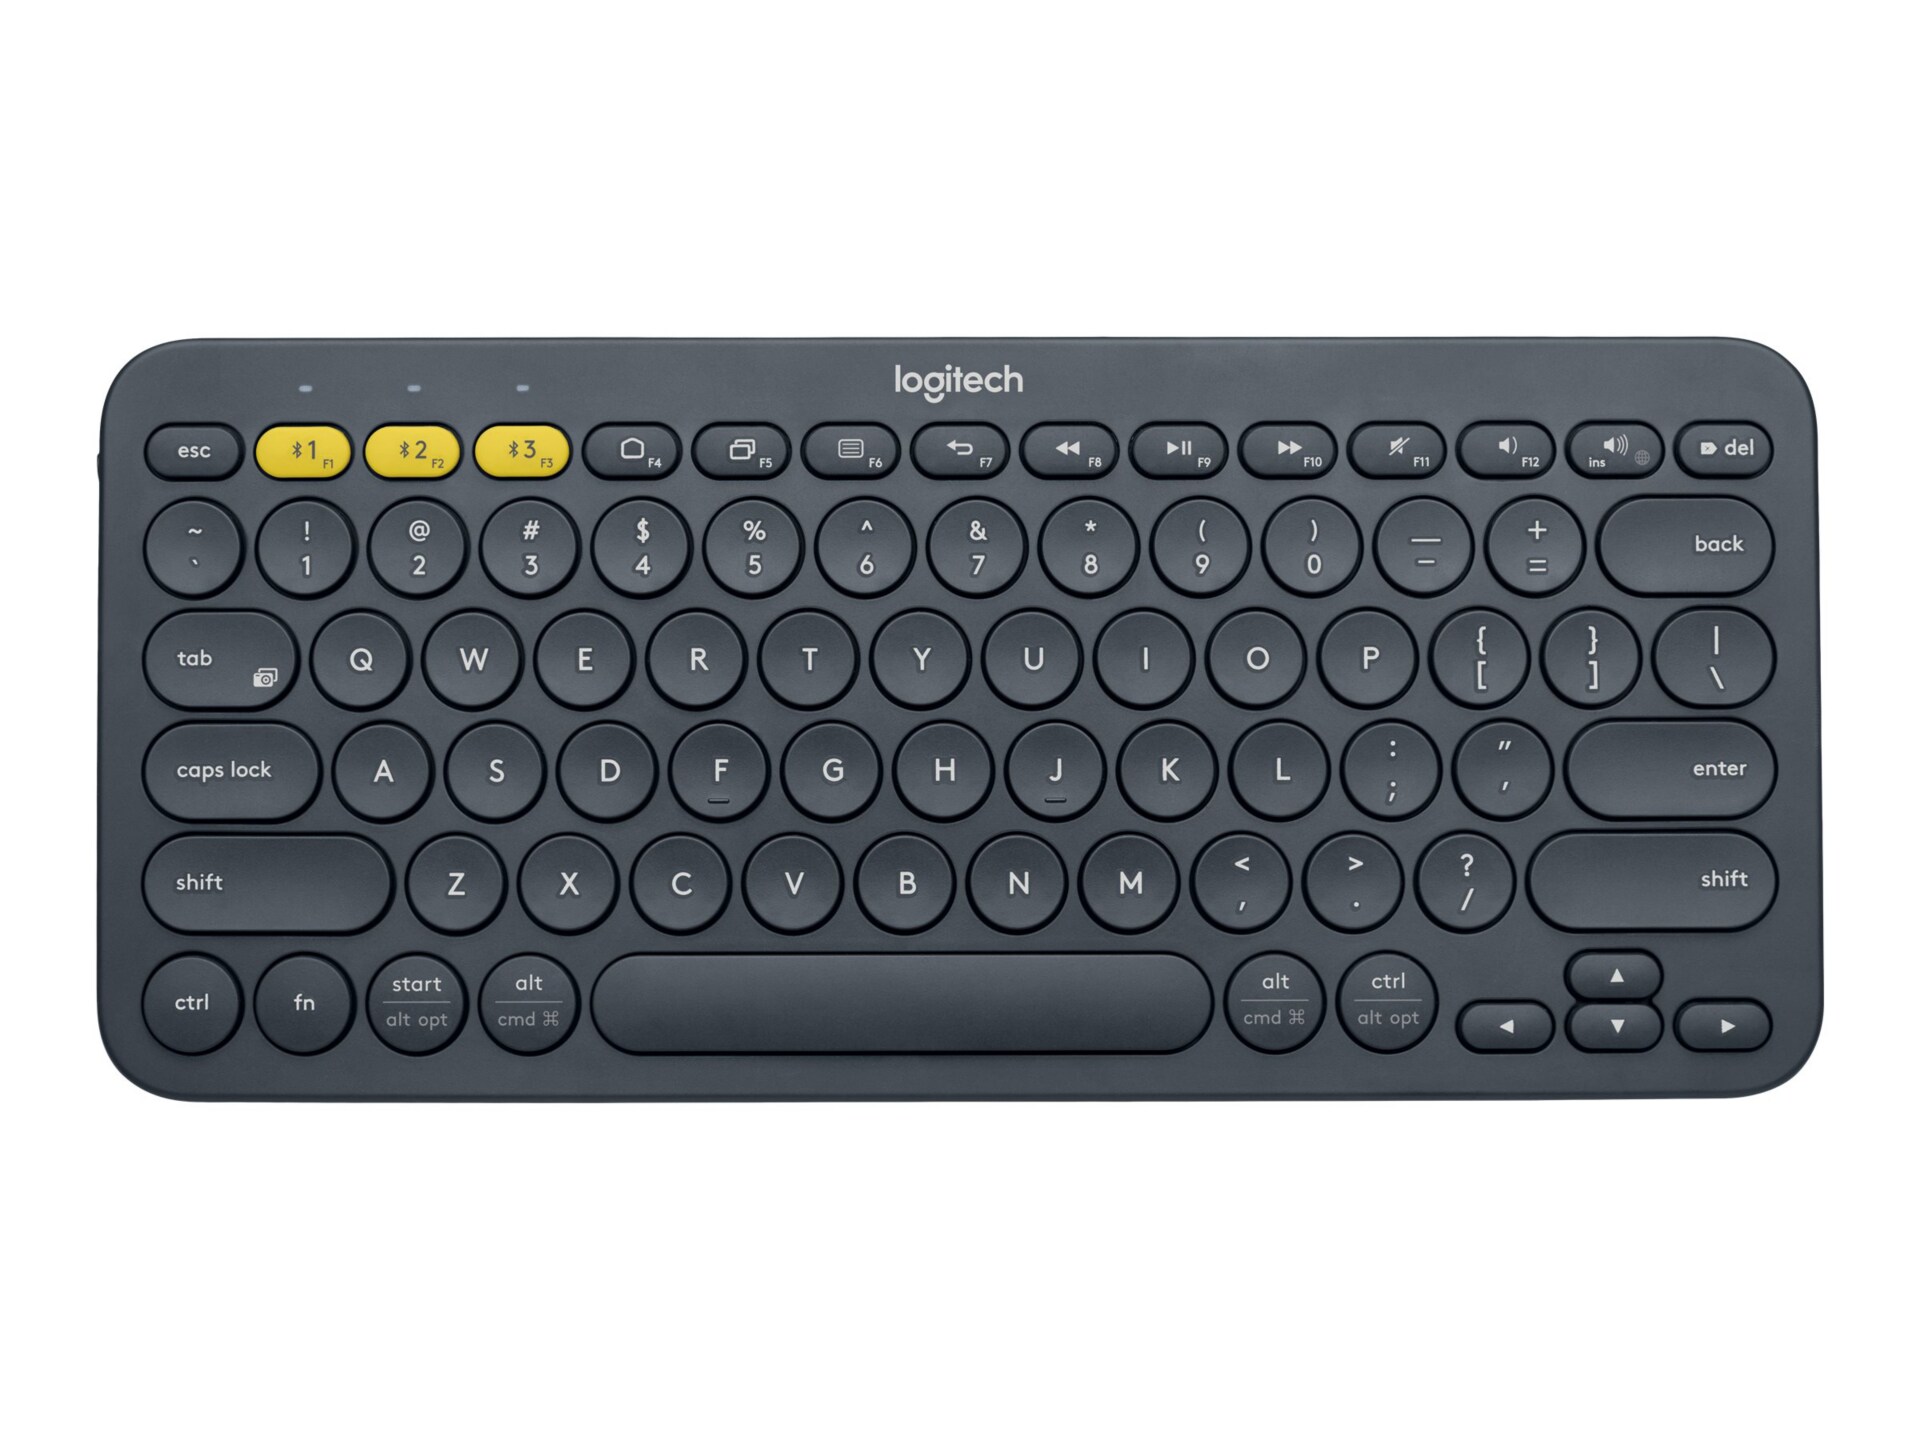 Logitech Multi-Device Bluetooth Keyboard - keyboard - - 920-007558 - Keyboards - CDW.com